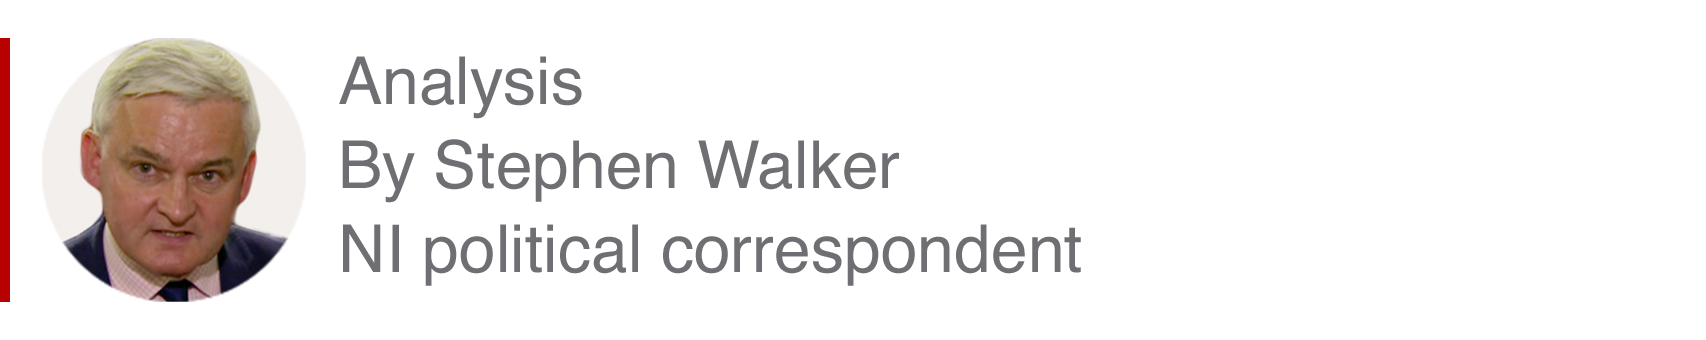 Analysis box by Stephen Walker, NI political correspondent